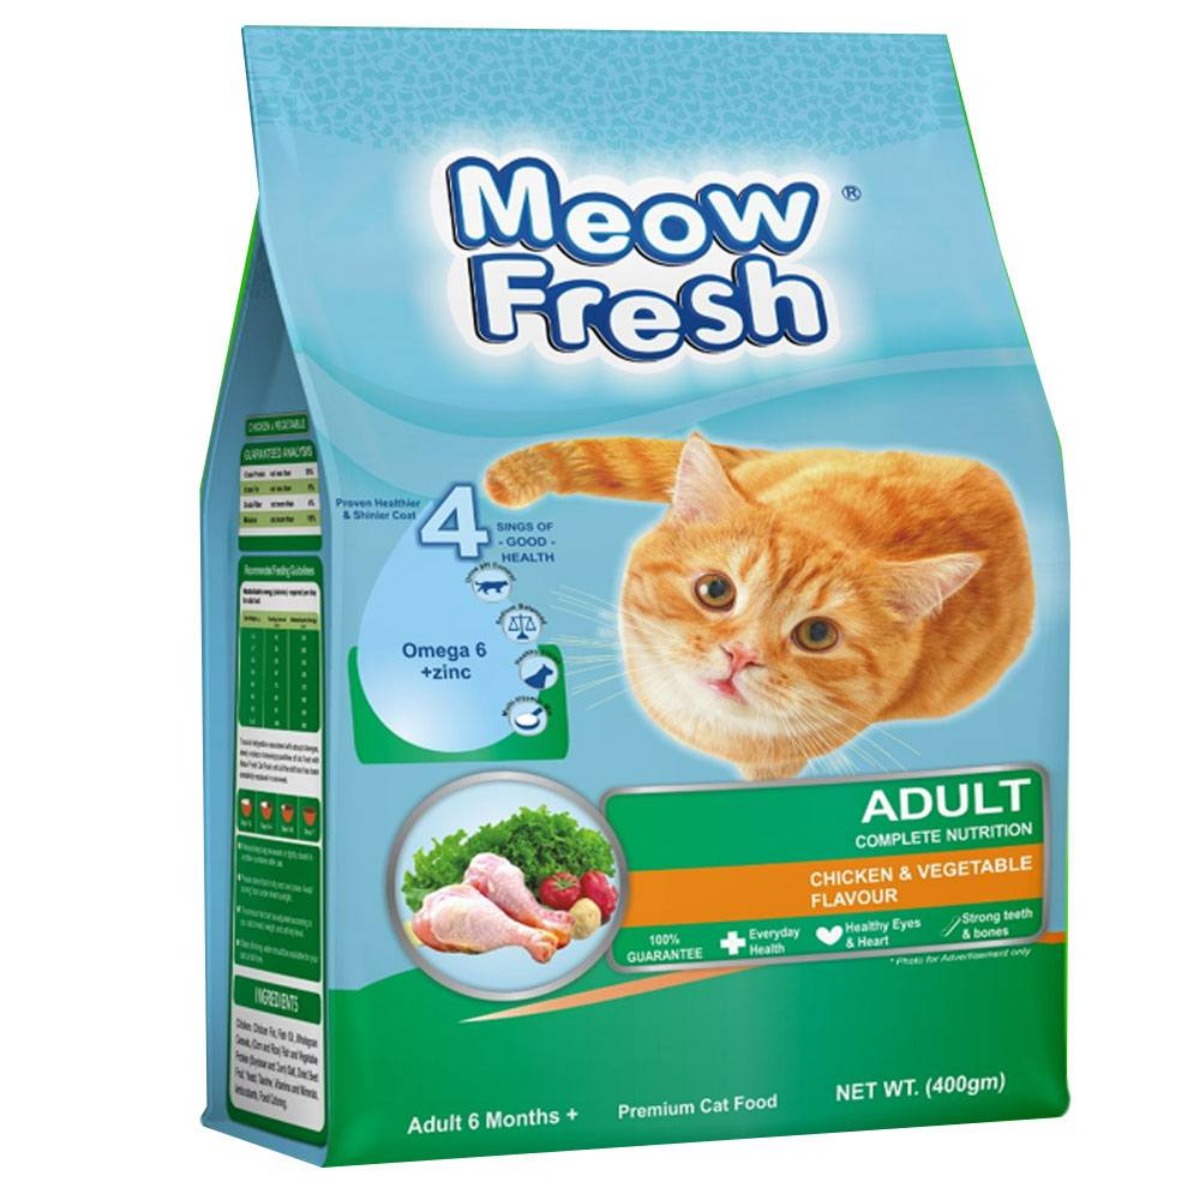  Meow Fresh adult 450g